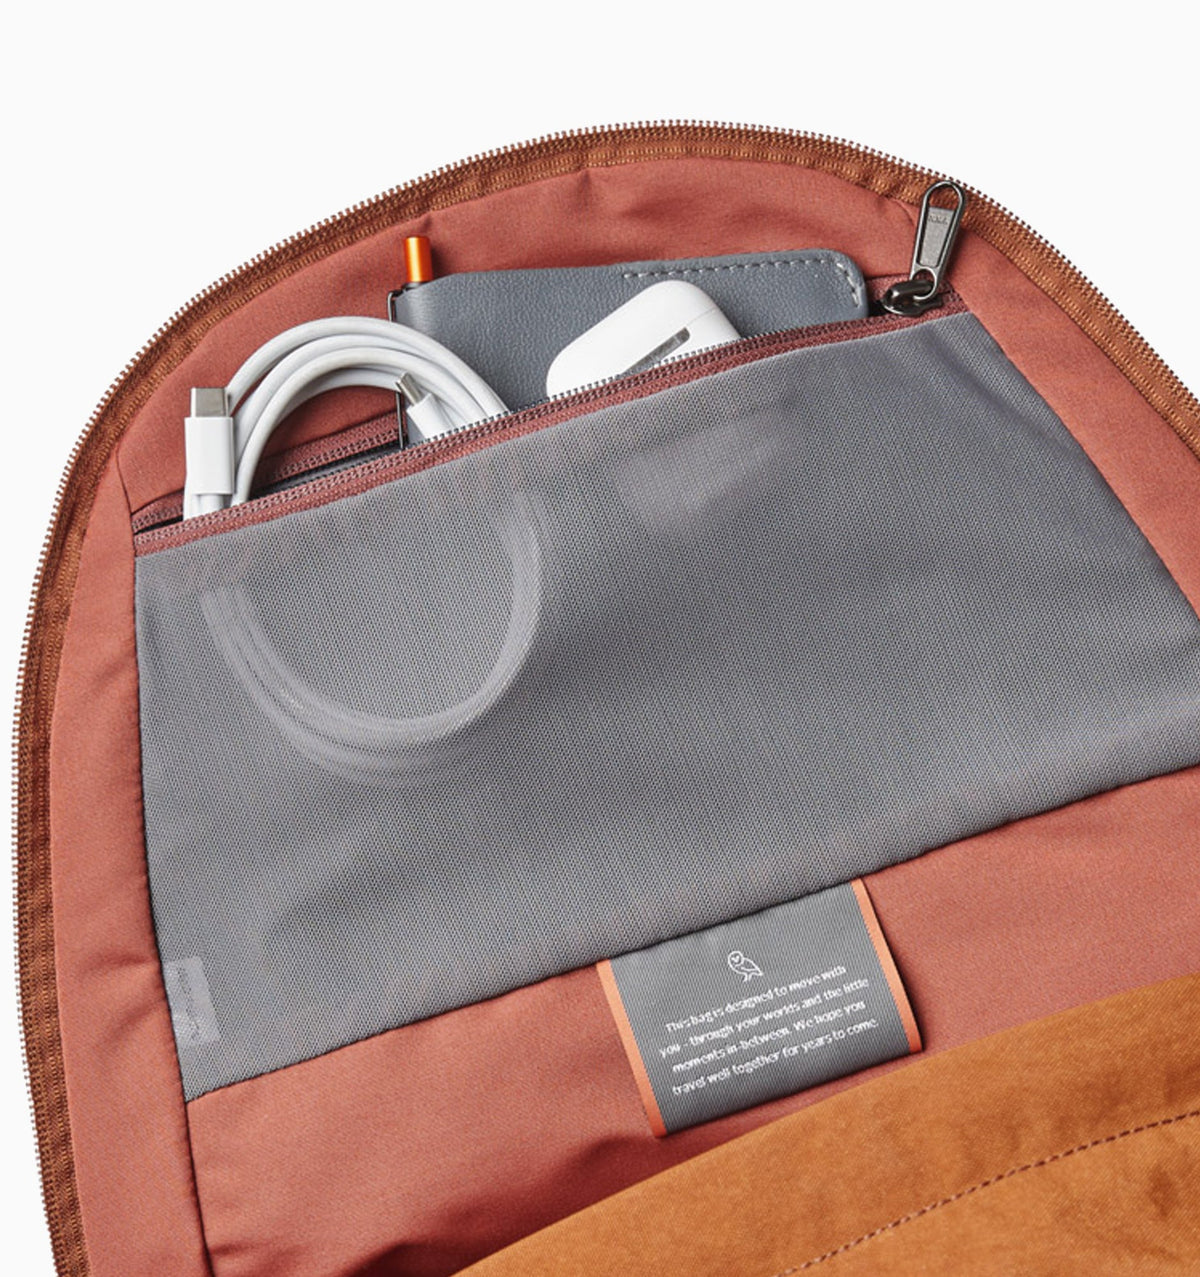 Bellroy Classic 20L 16" Laptop Backpack - Bronze